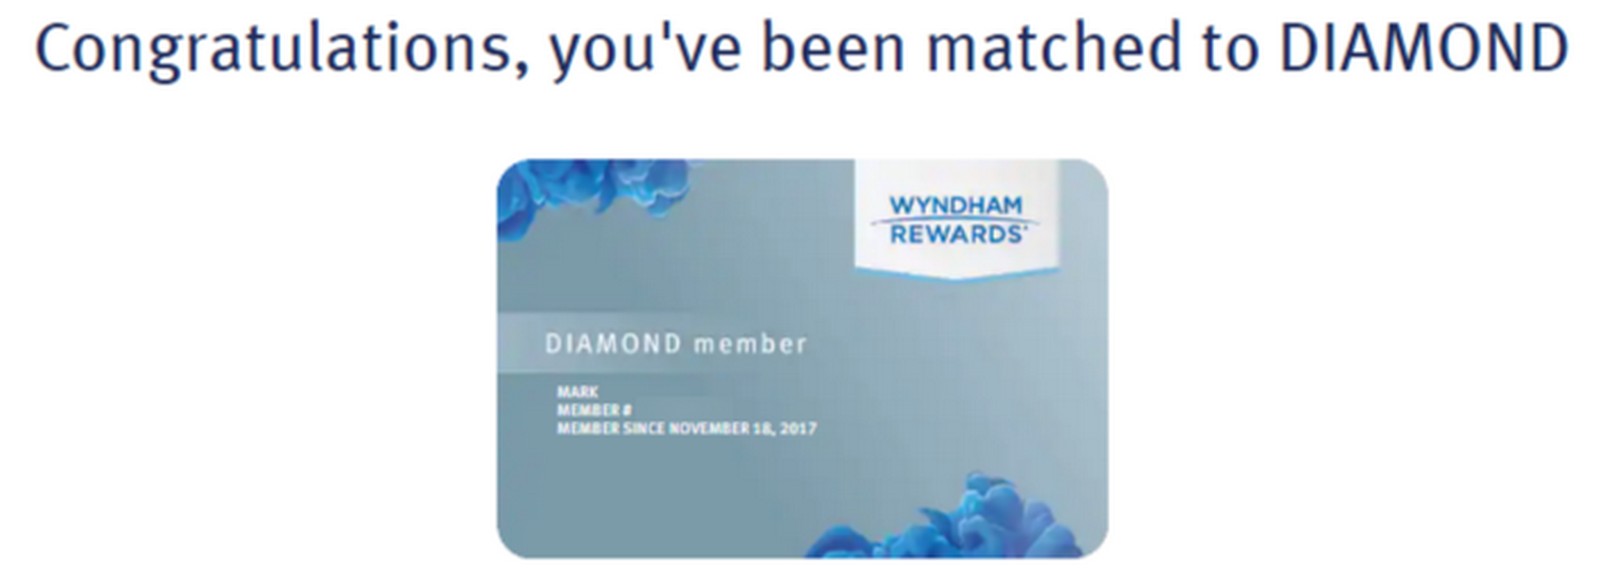 How To Status Match Caesars Rewards to Wyndham Diamond